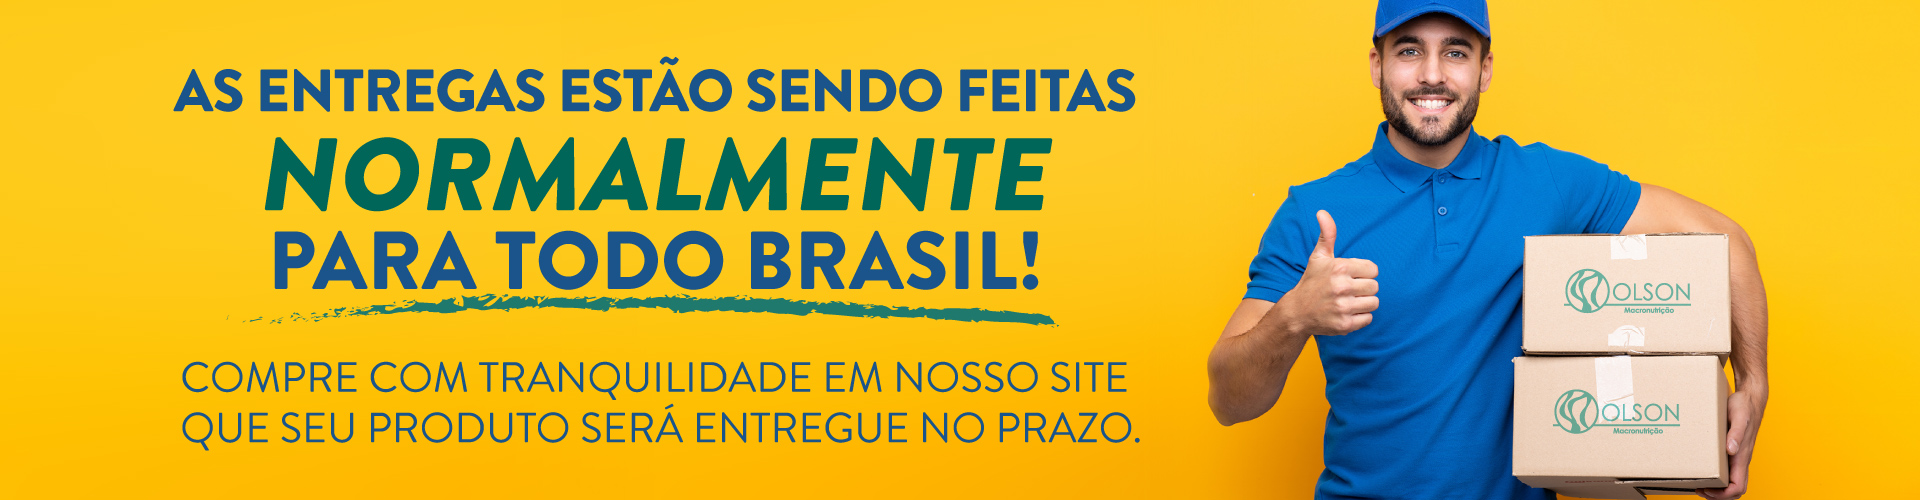 Entregas todo brasil